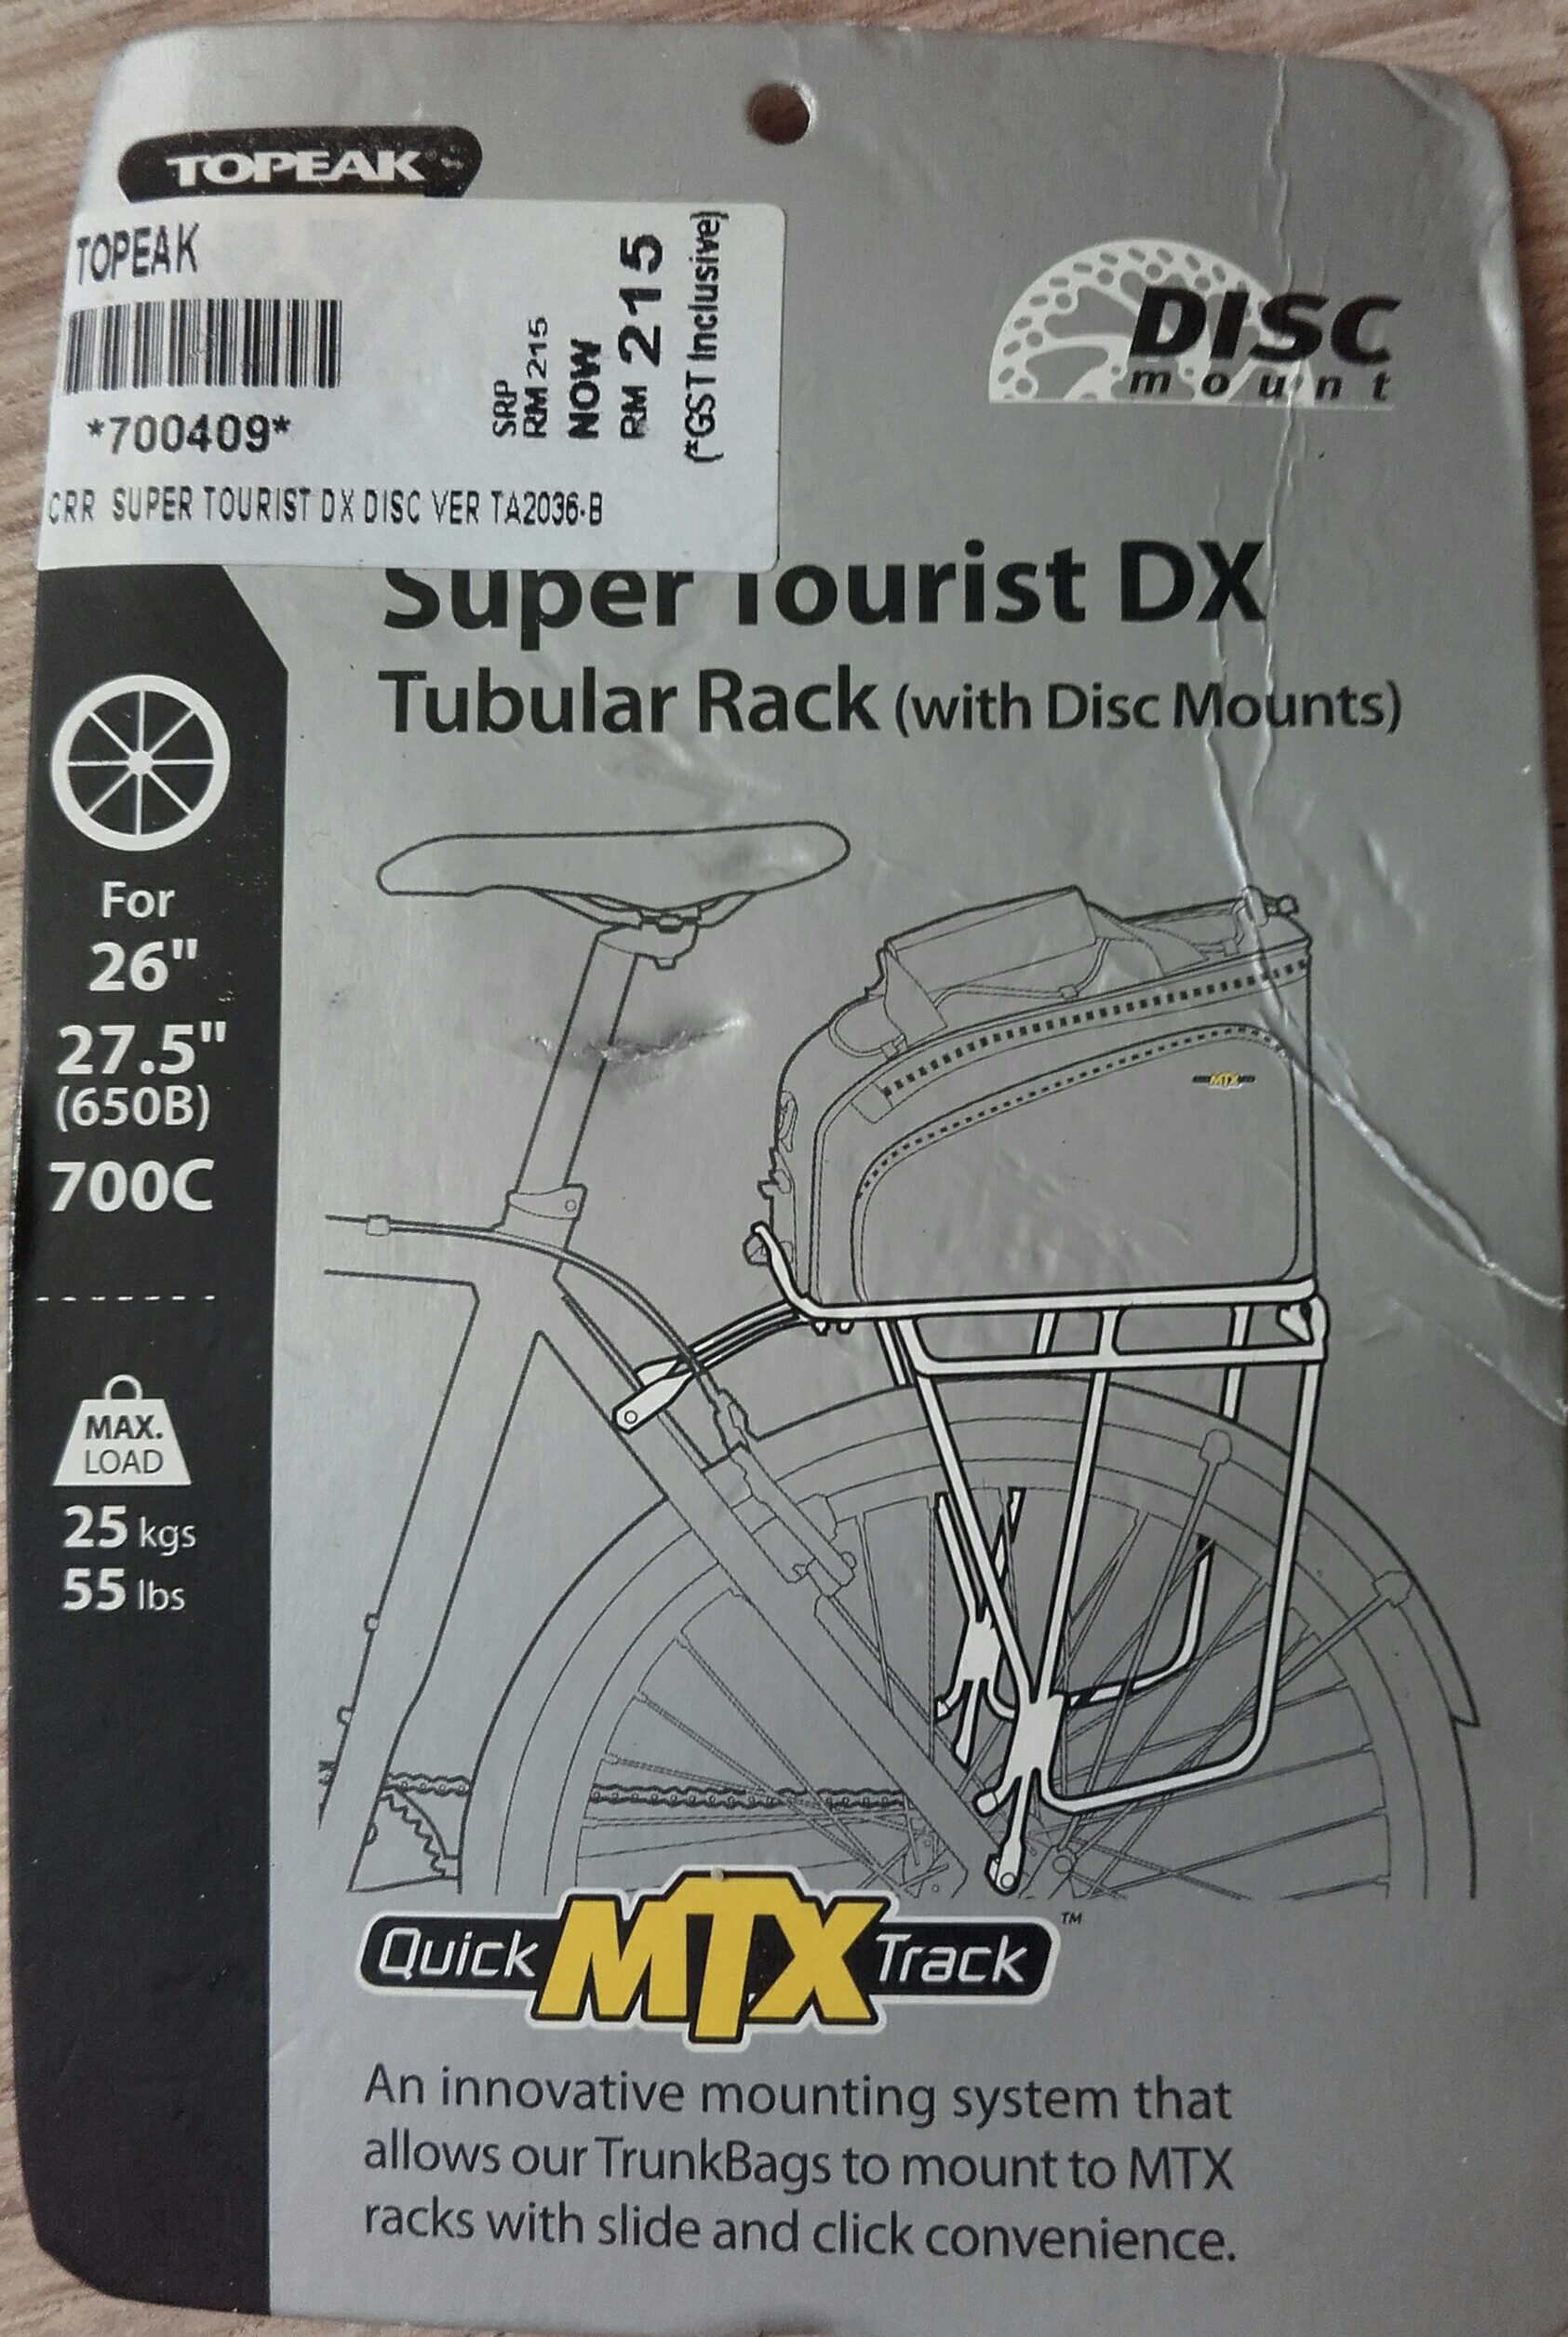 Super Tourist DX Tubular Rack (with Disc Mounts) - Produit - fr